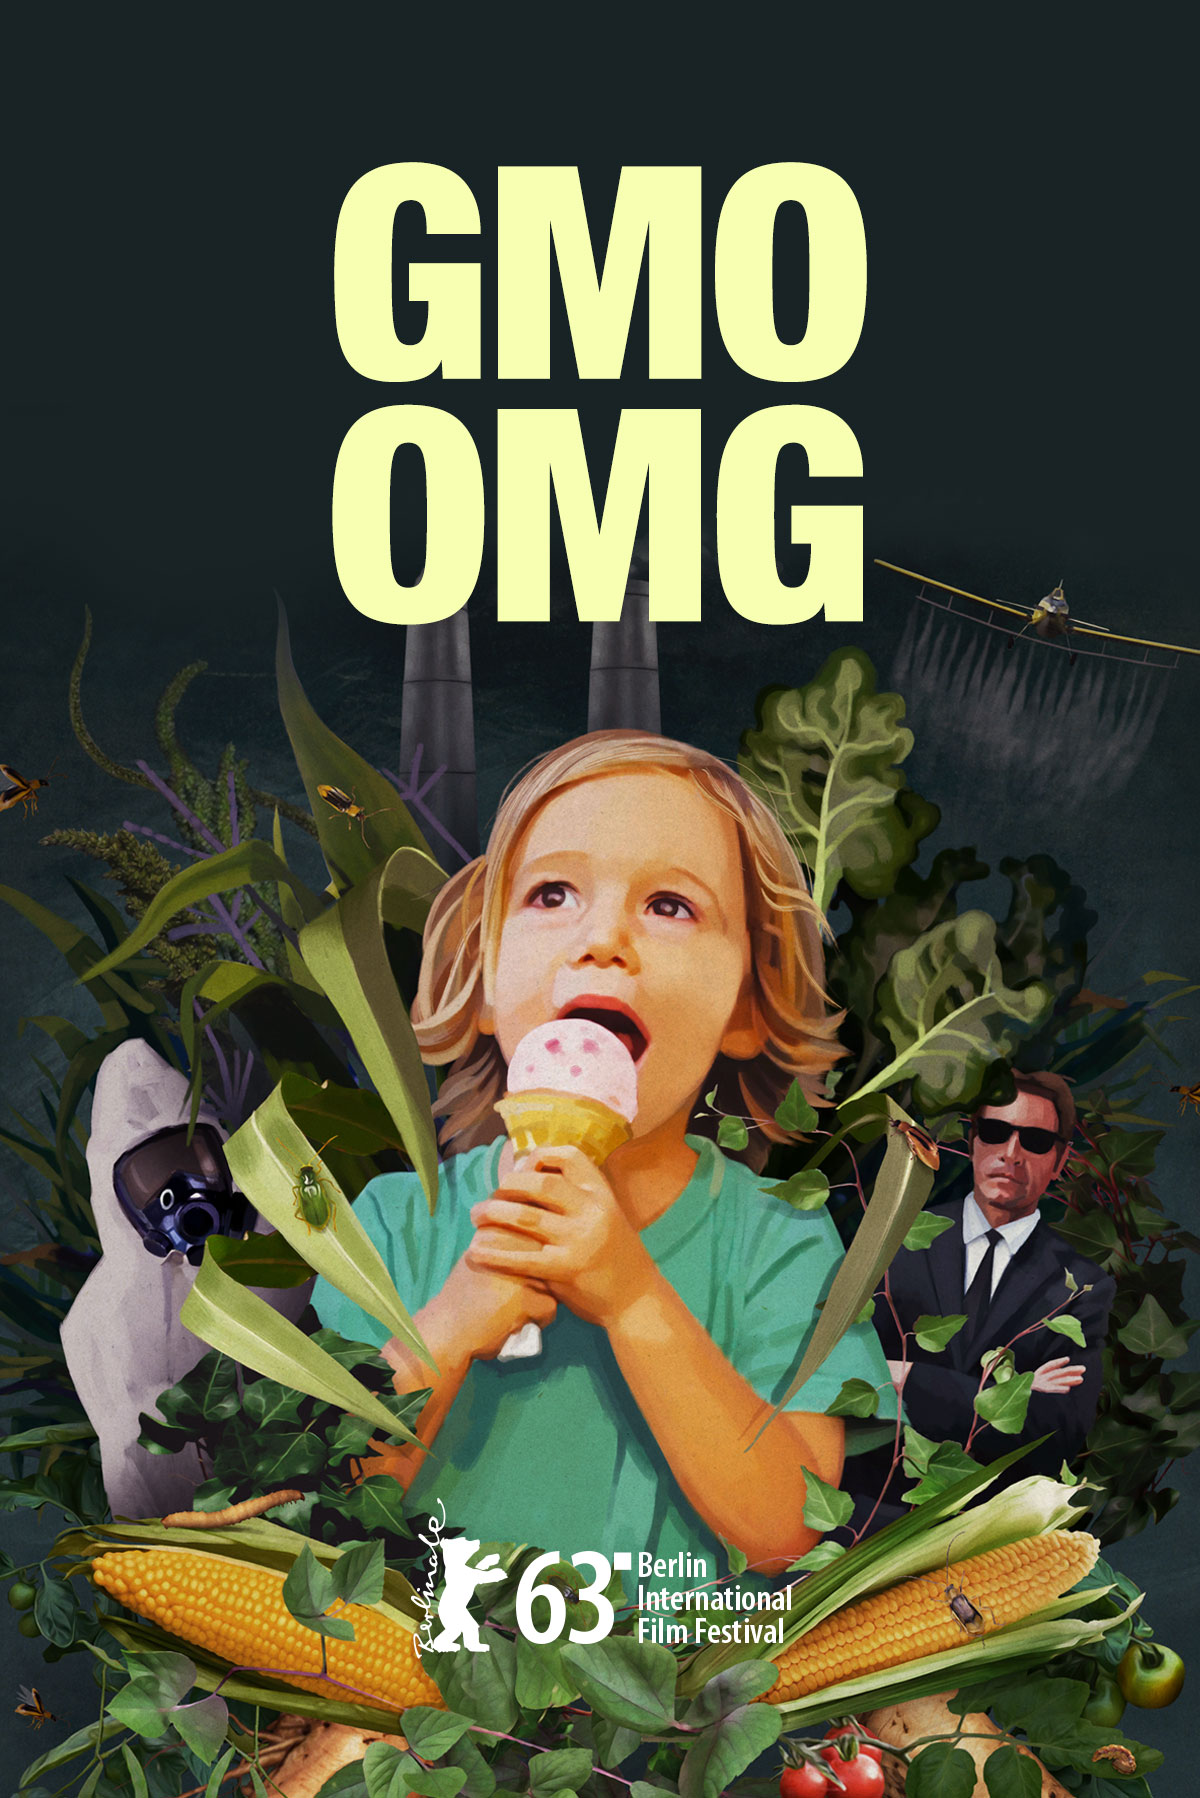 GMO OMG